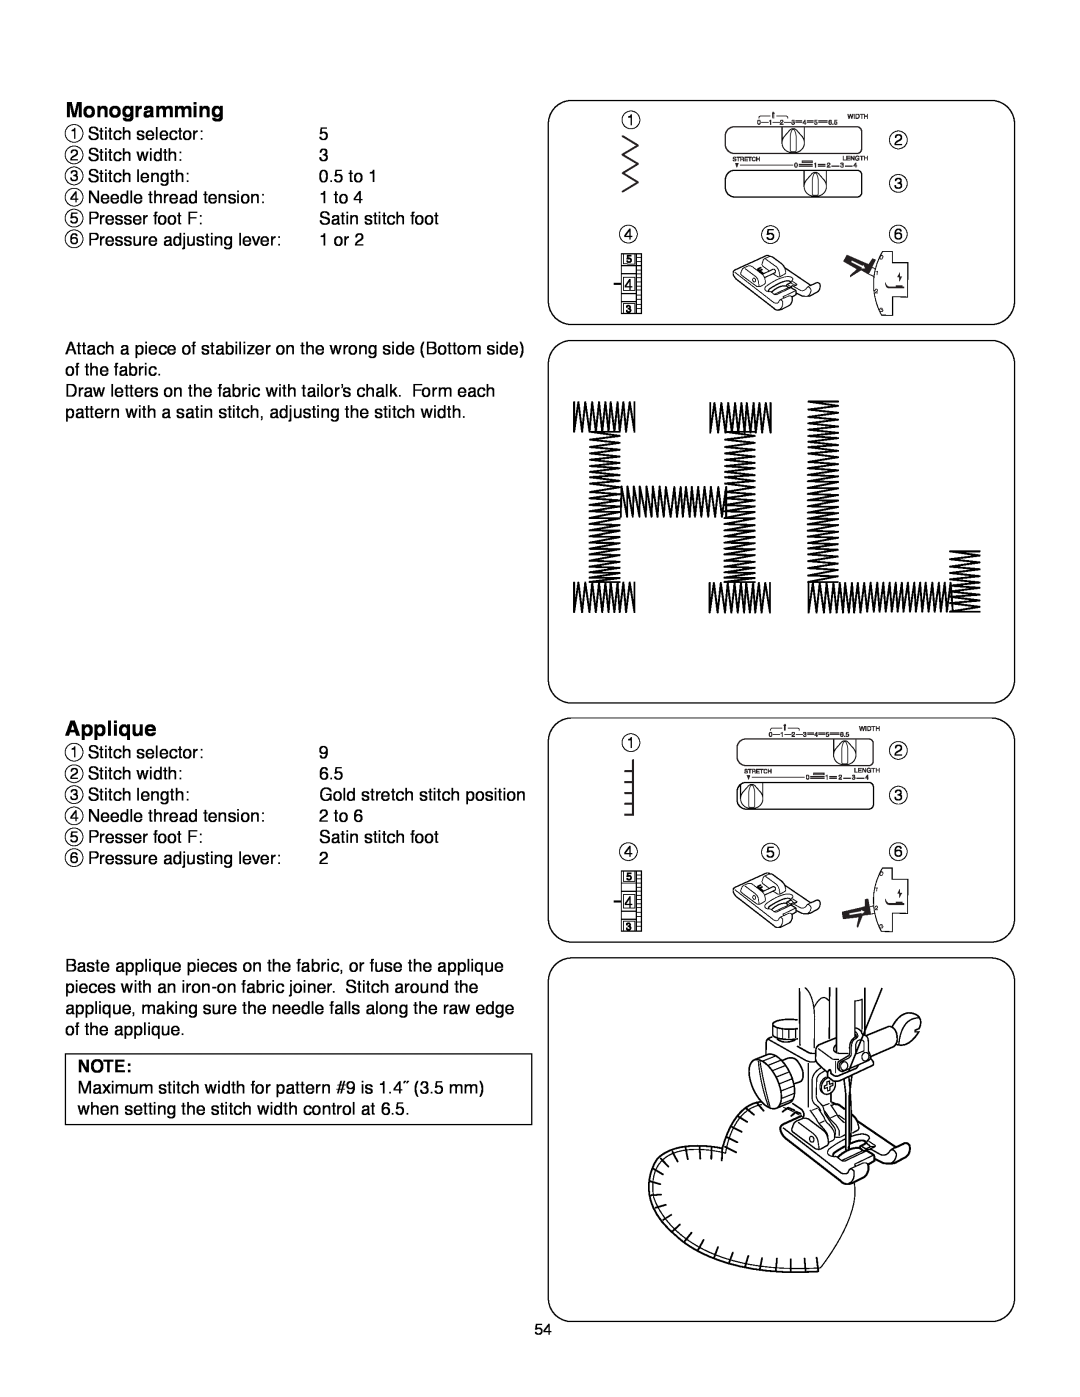 Janome MS-5027 instruction manual Monogramming, Applique 